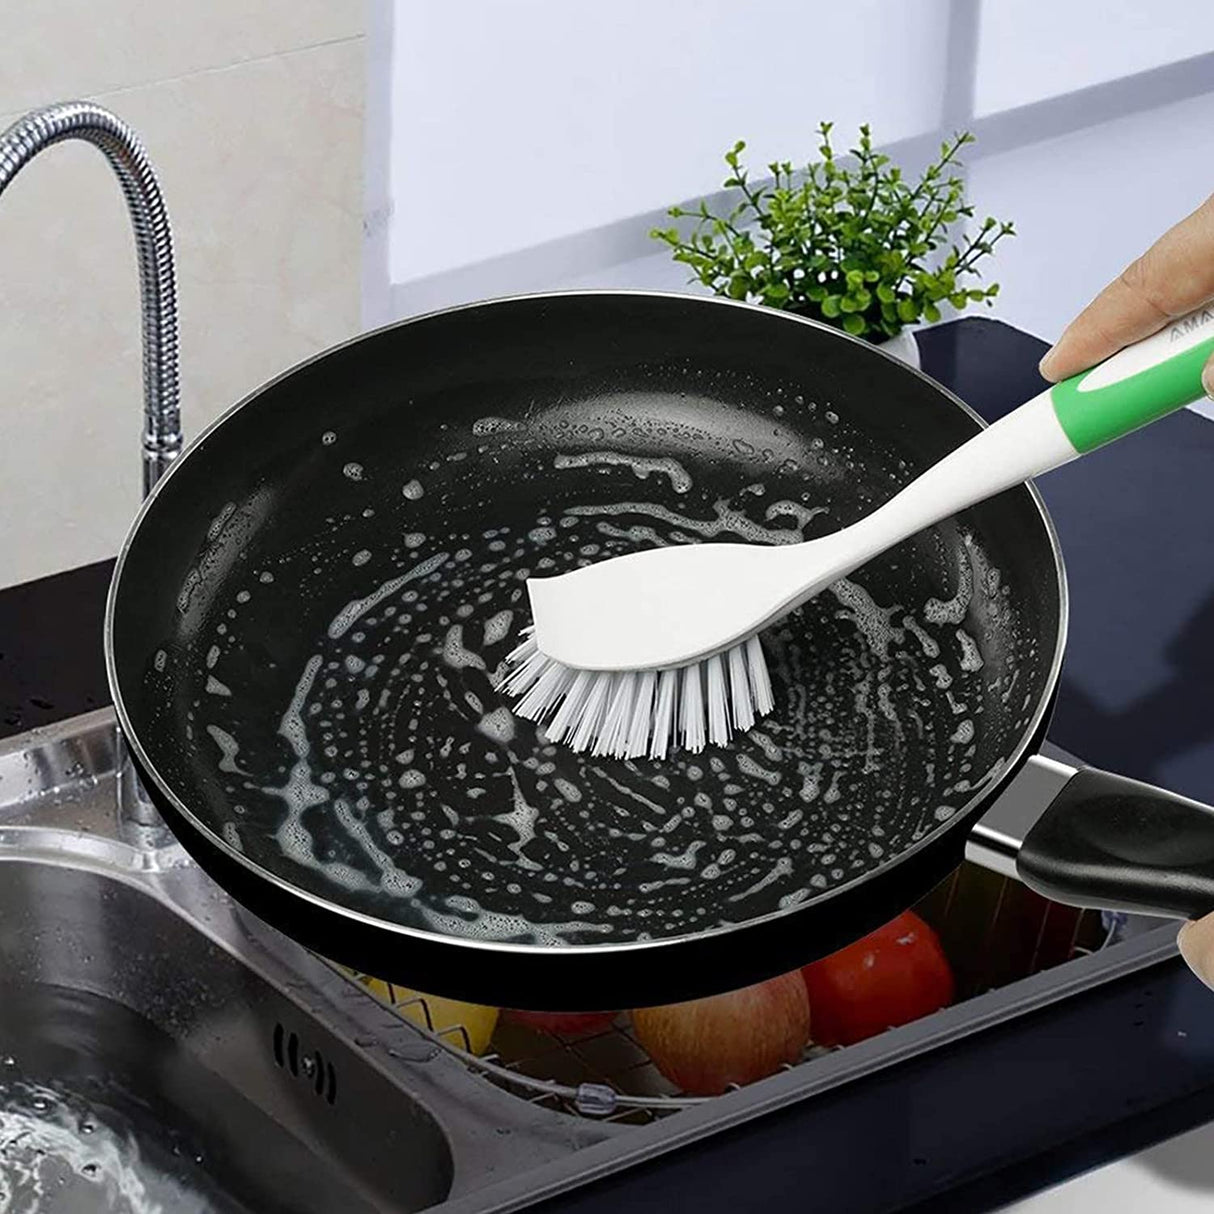 LOT OF 2 Kitchen Dish Scrub Brush Cleaning Scrubber Dishes Washing Scraper